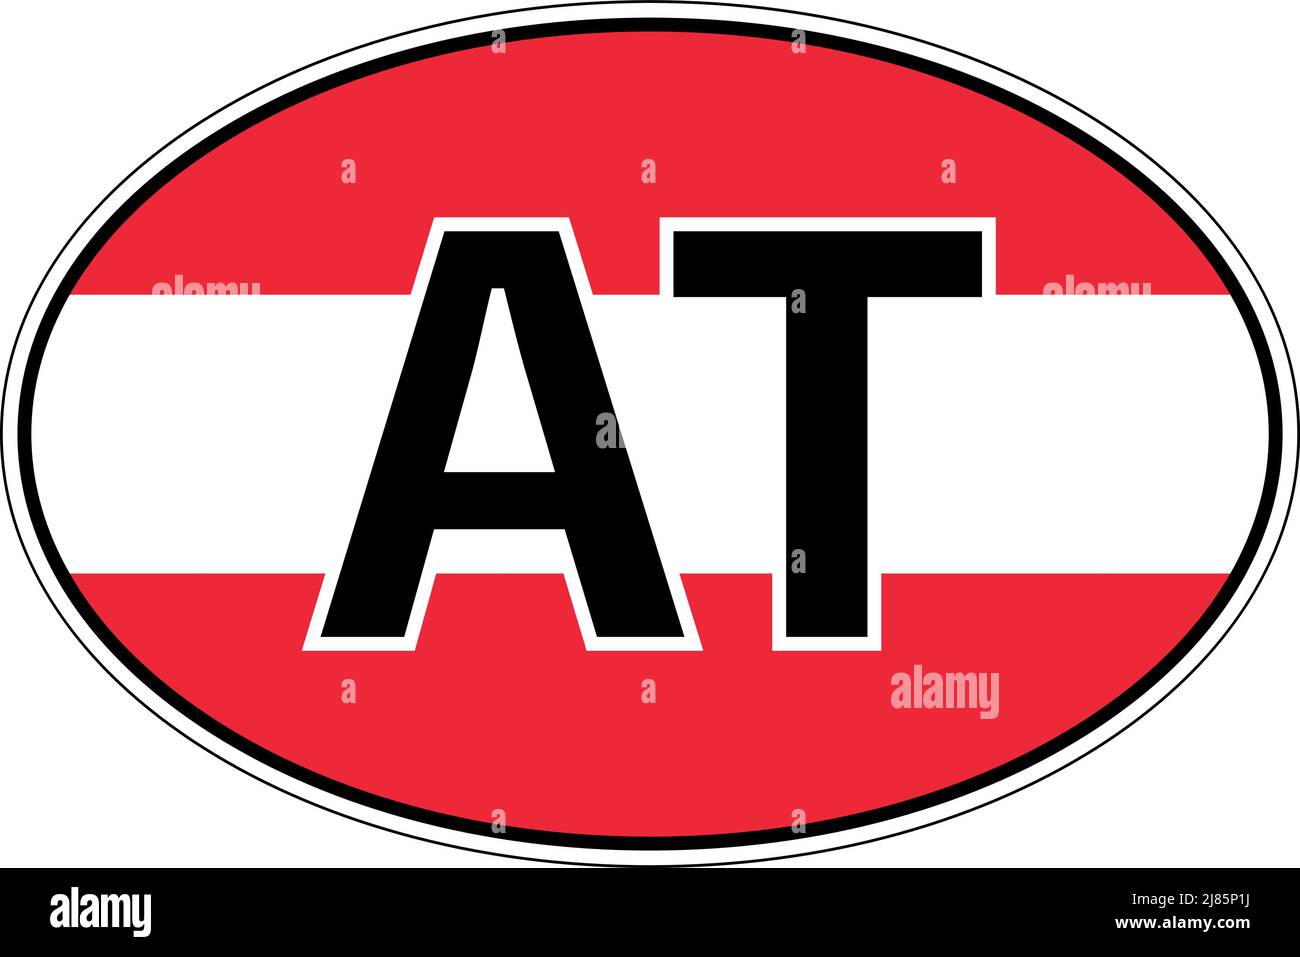 Austria AT flag label sticker on car, international license plate Stock Vector